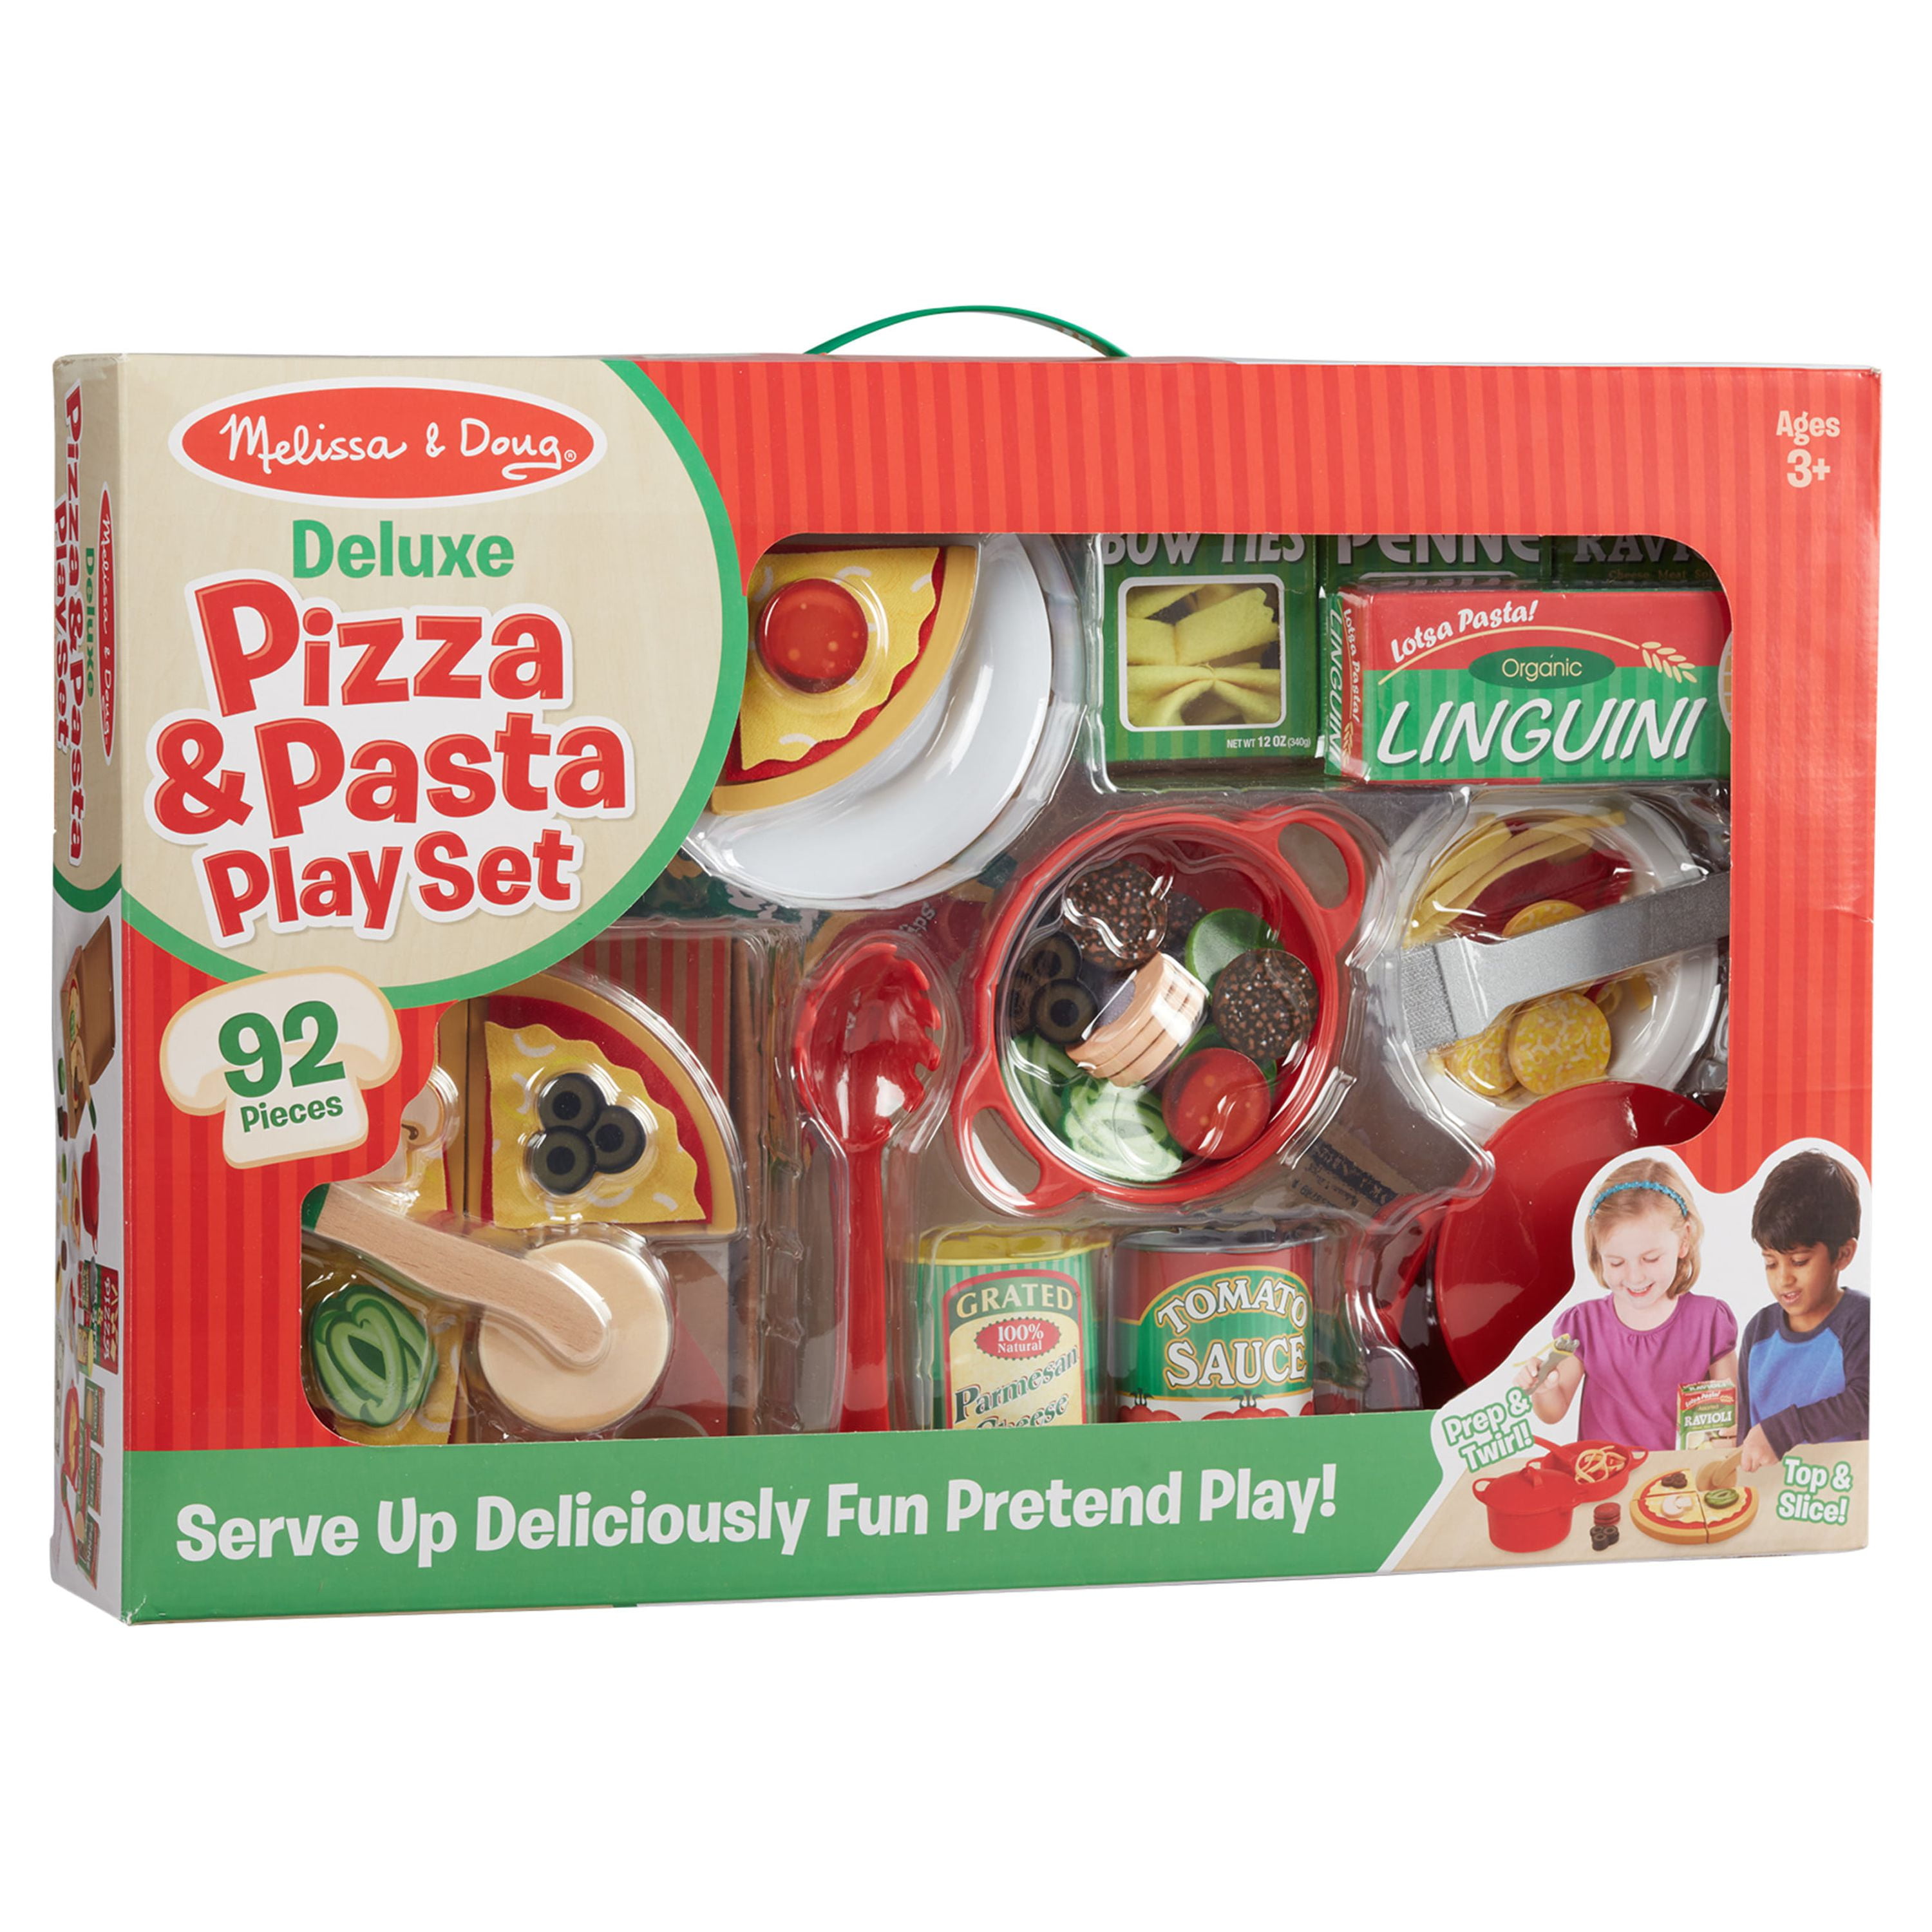 Made For Me Beginner's Pasta & Pizza Making Set For Kids